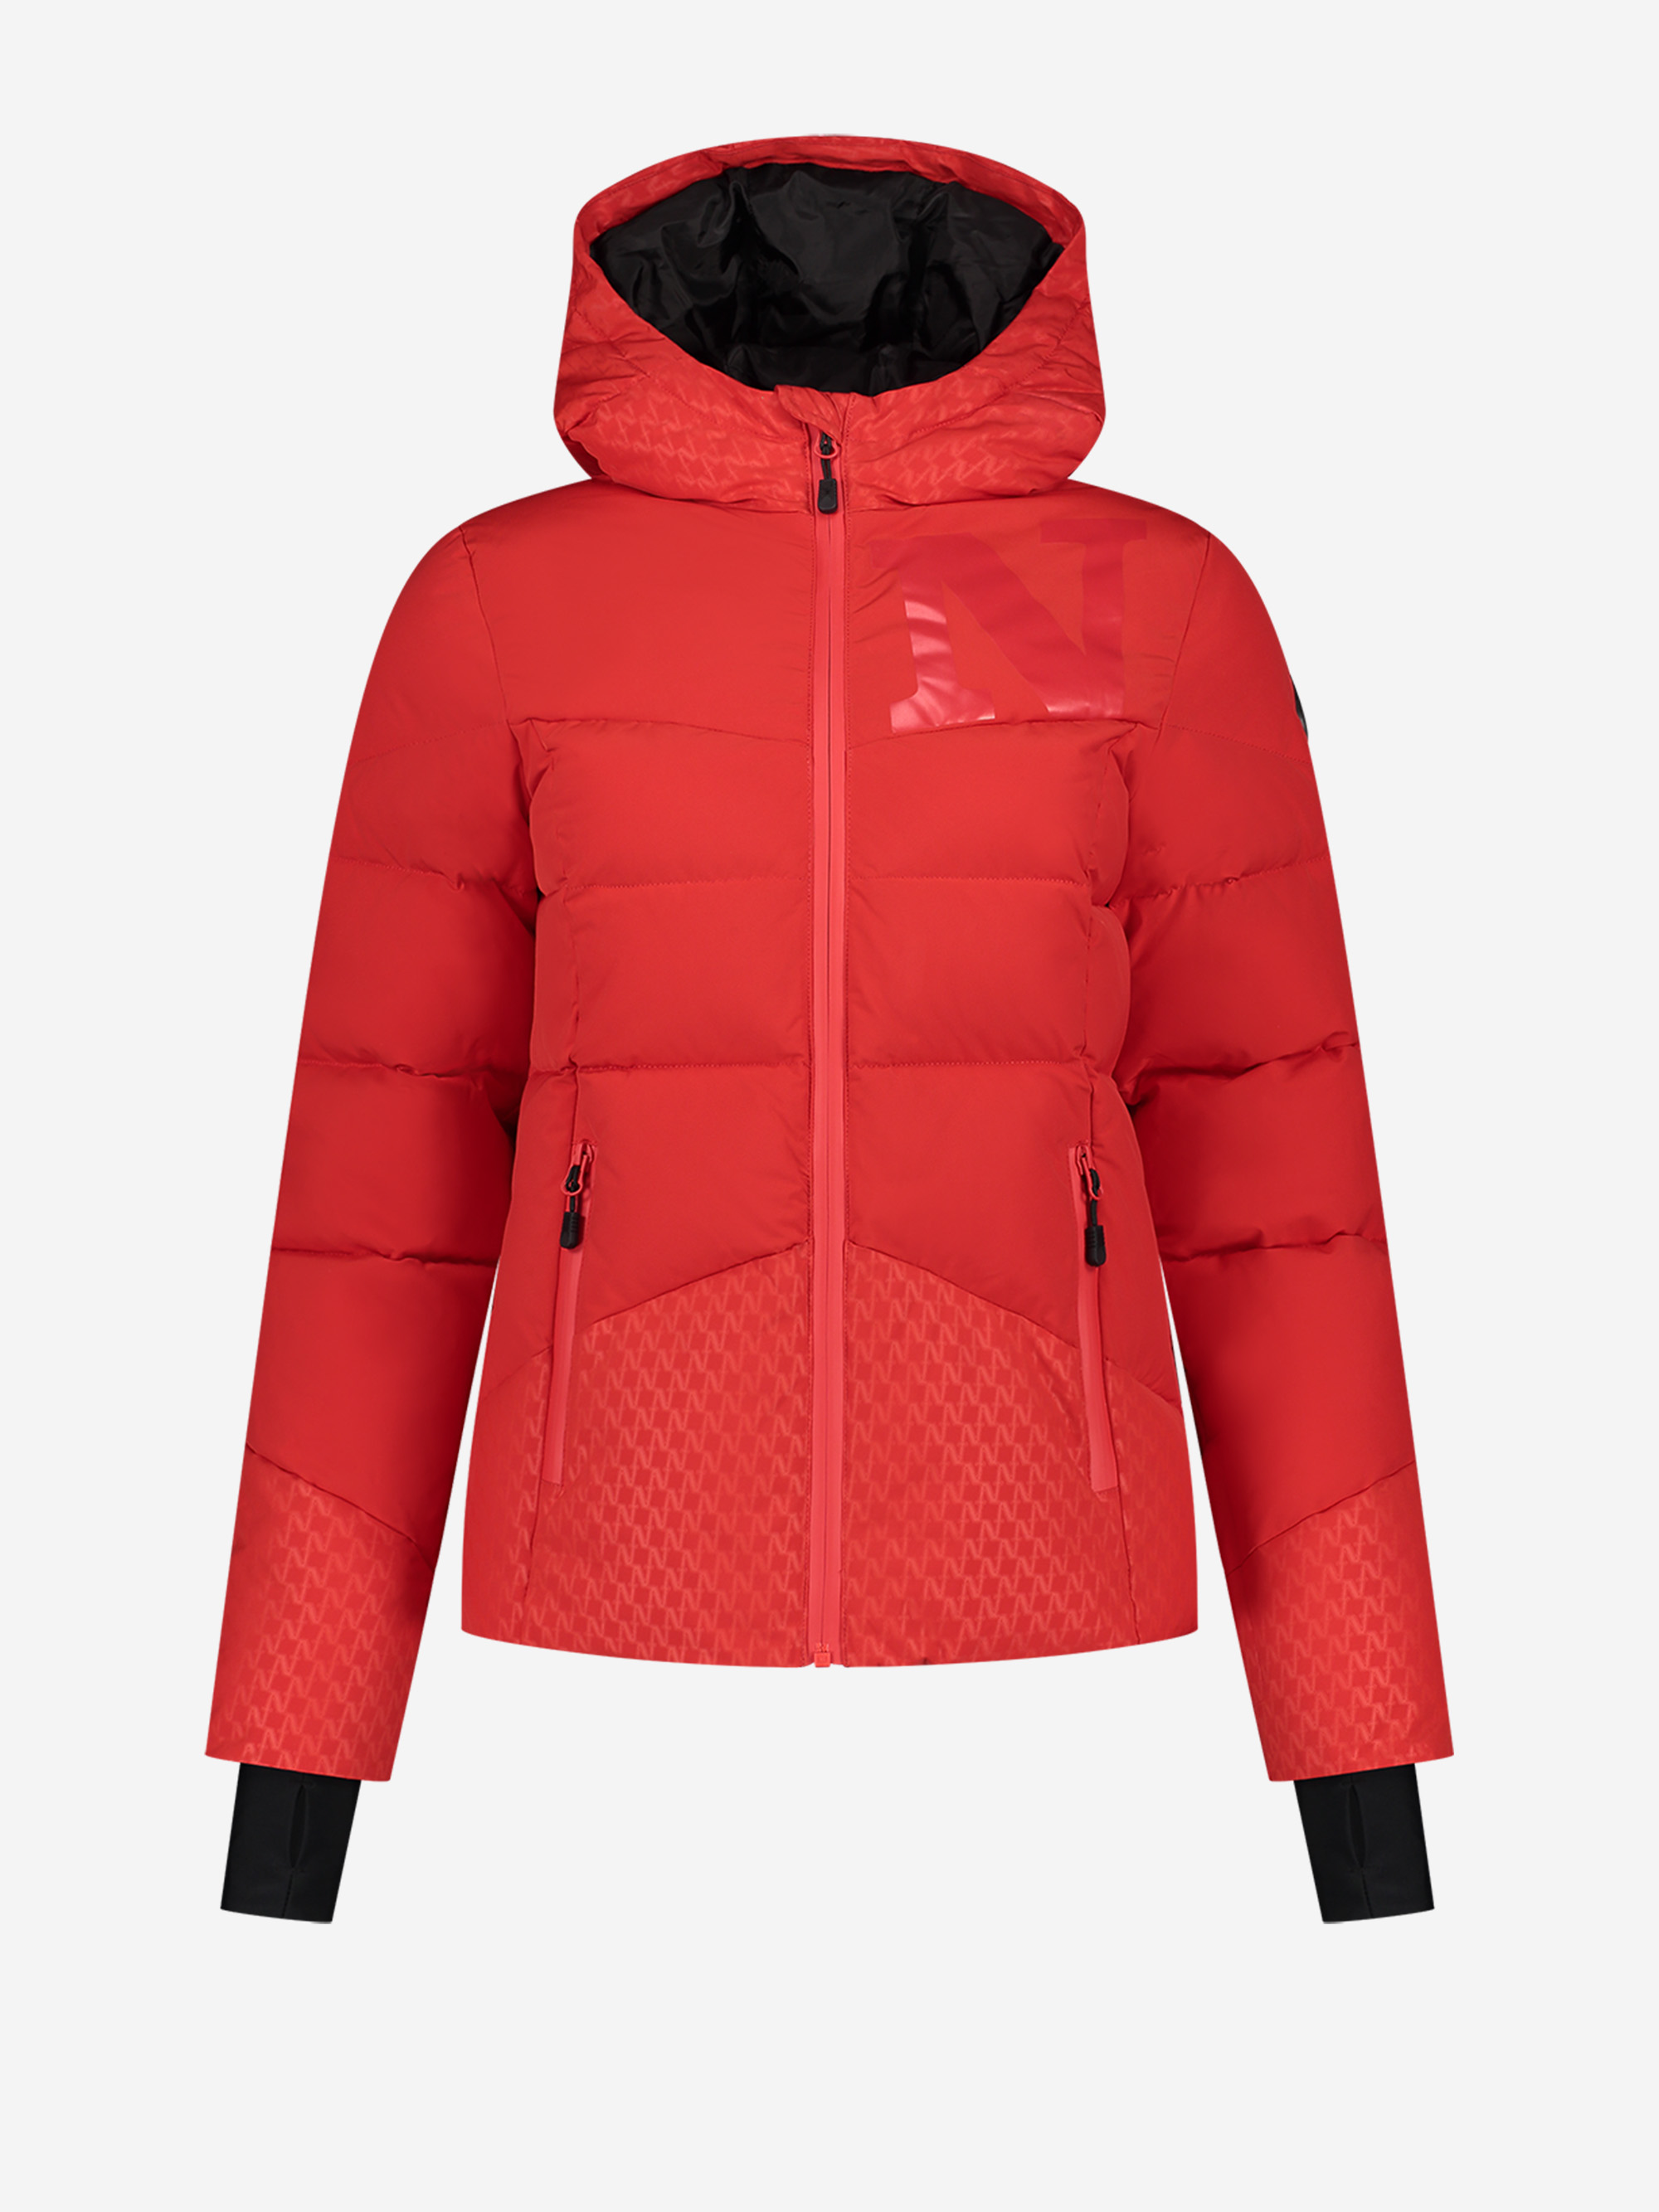 N logo ski jacket 